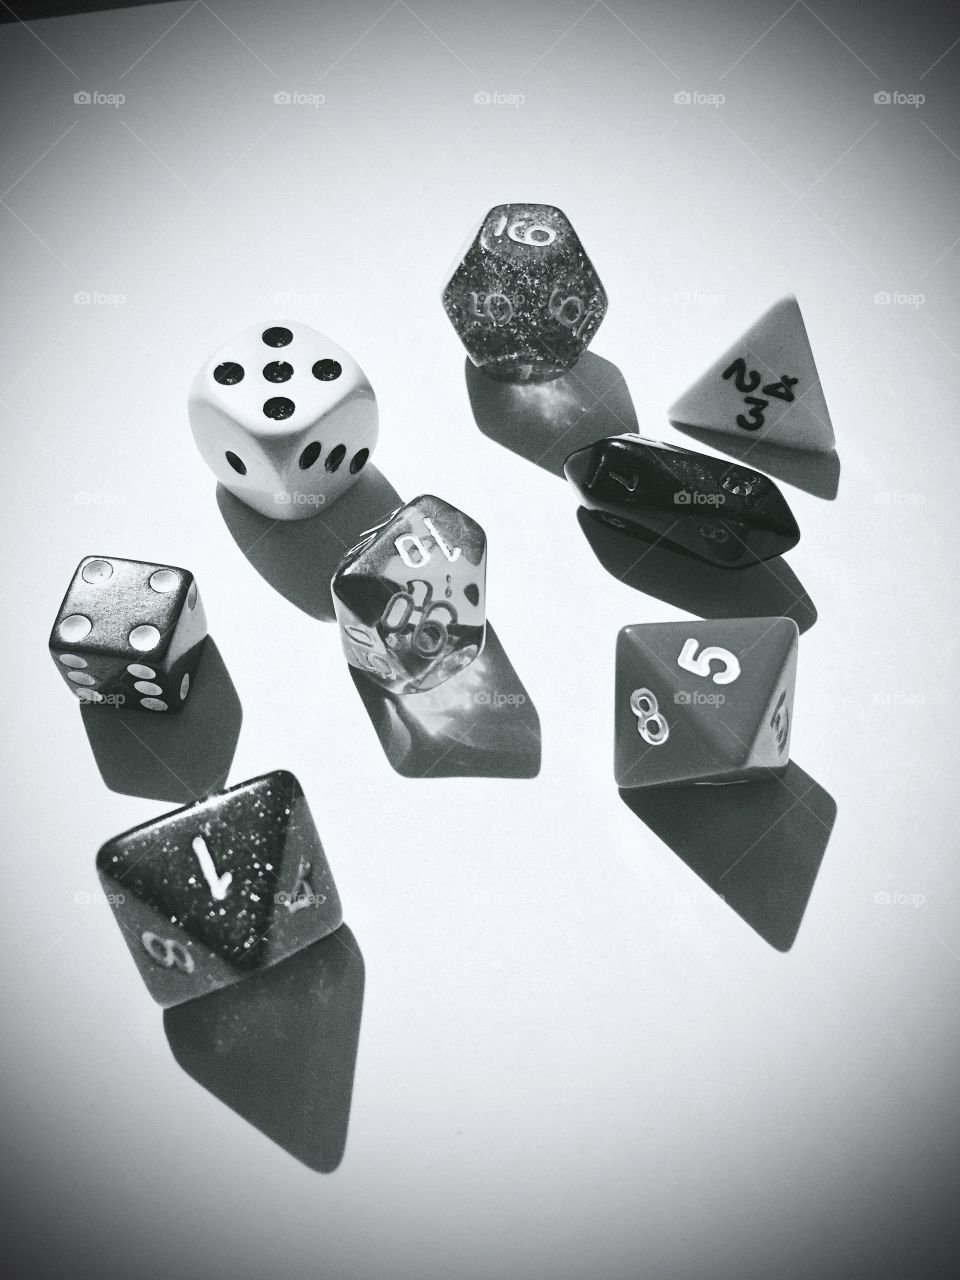 An assortment of dice in a beam of sunlight